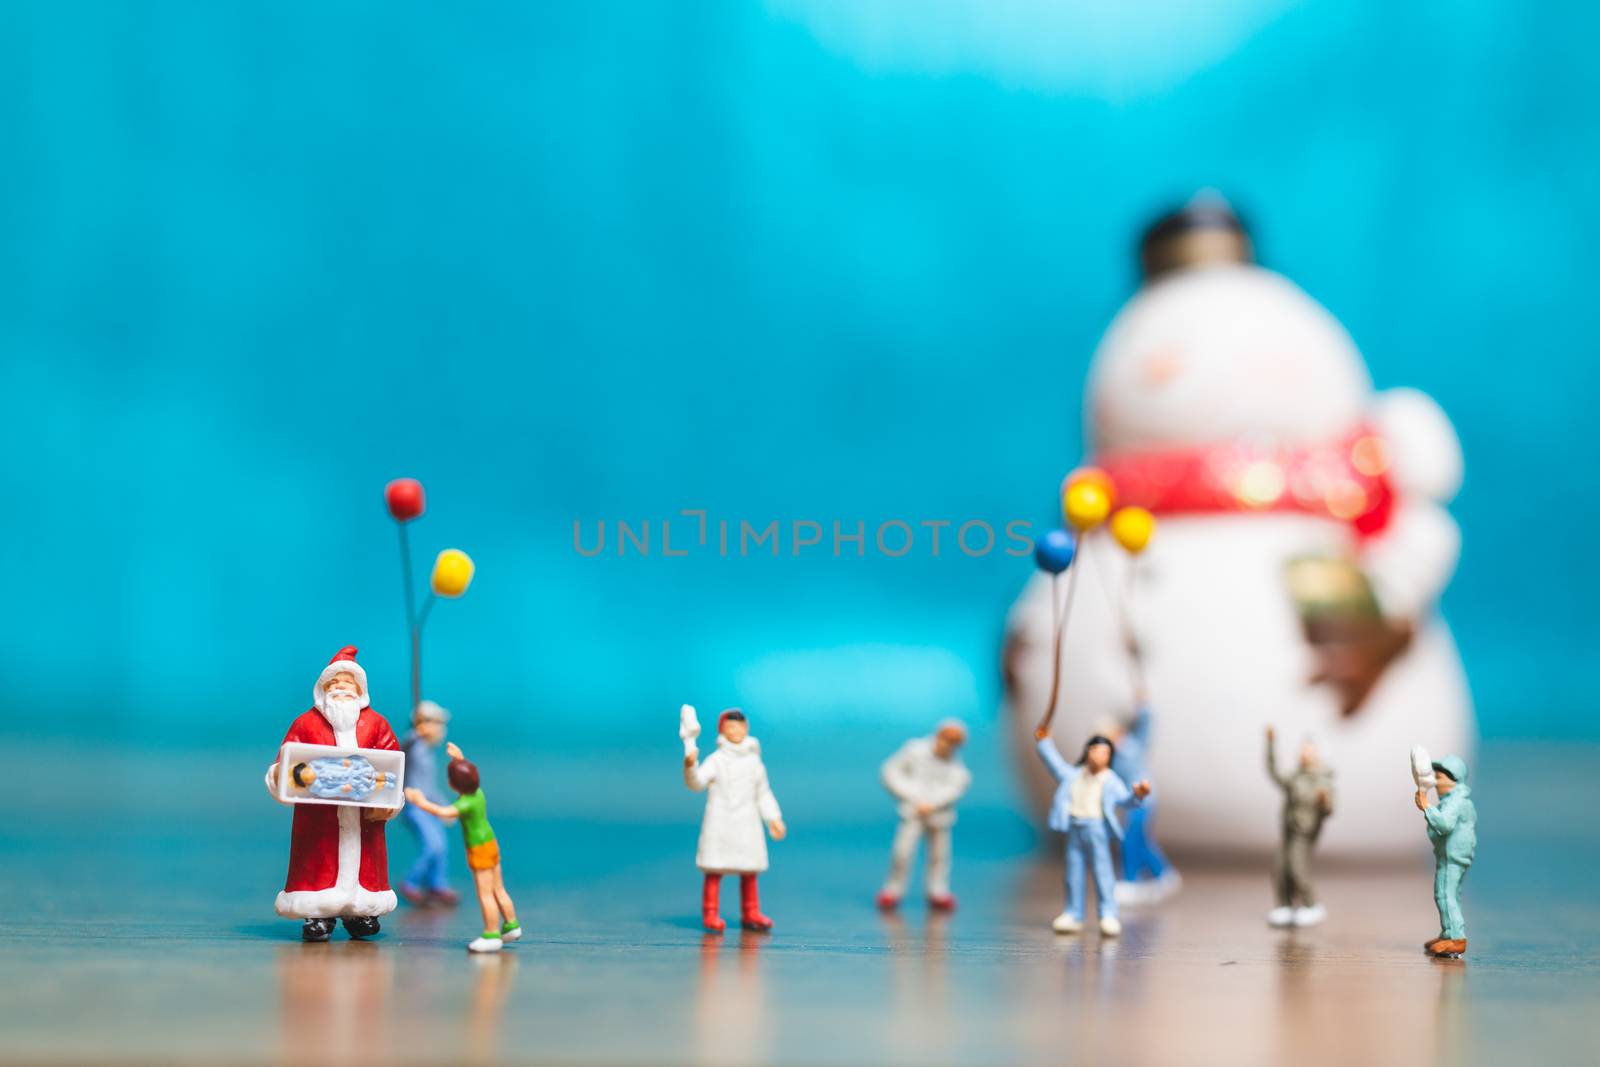 Miniature people, Happy family celebrating A Christmas by sirichaiyaymicro